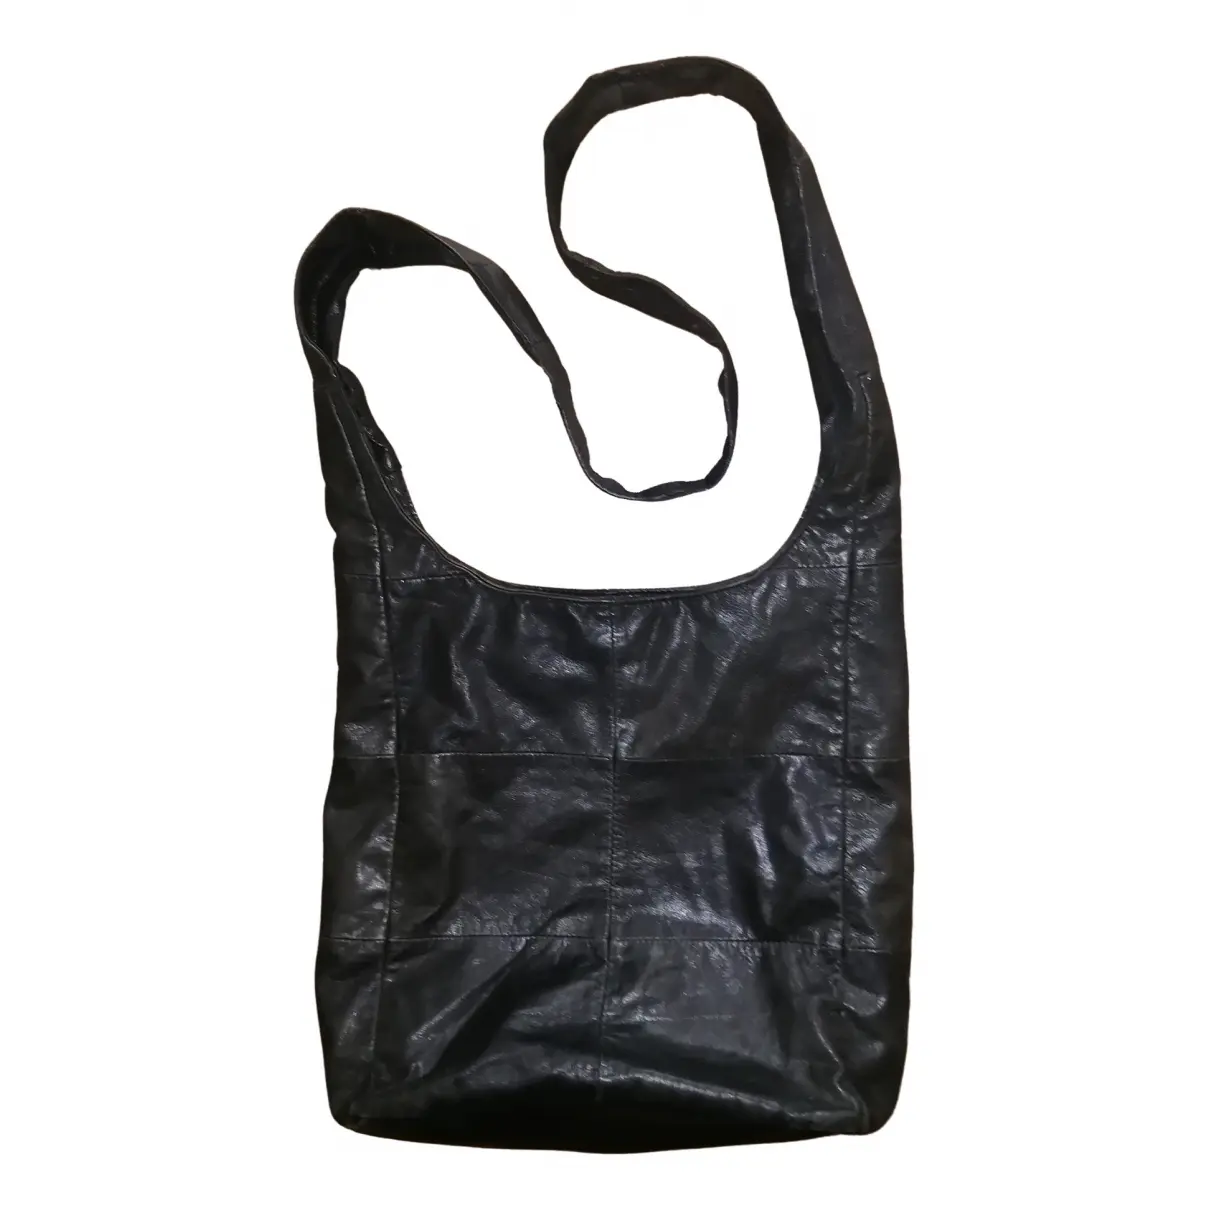 Leather handbag Beck Sonder Gaard